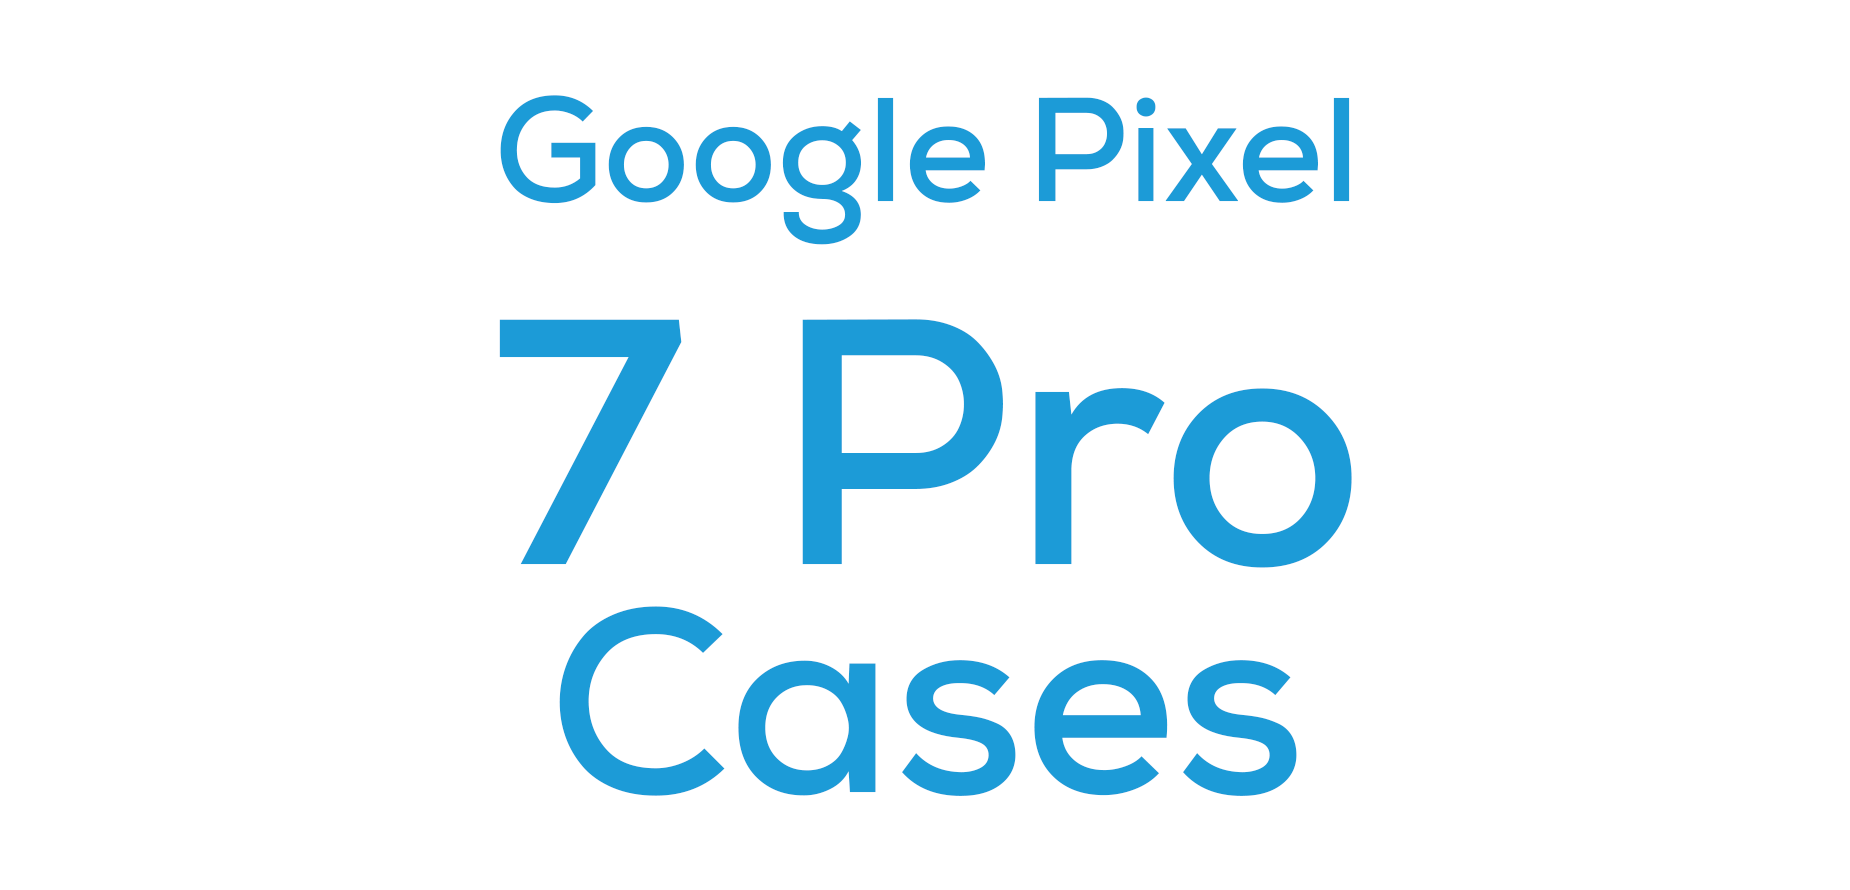 Google Pixel 7 Pro Cases